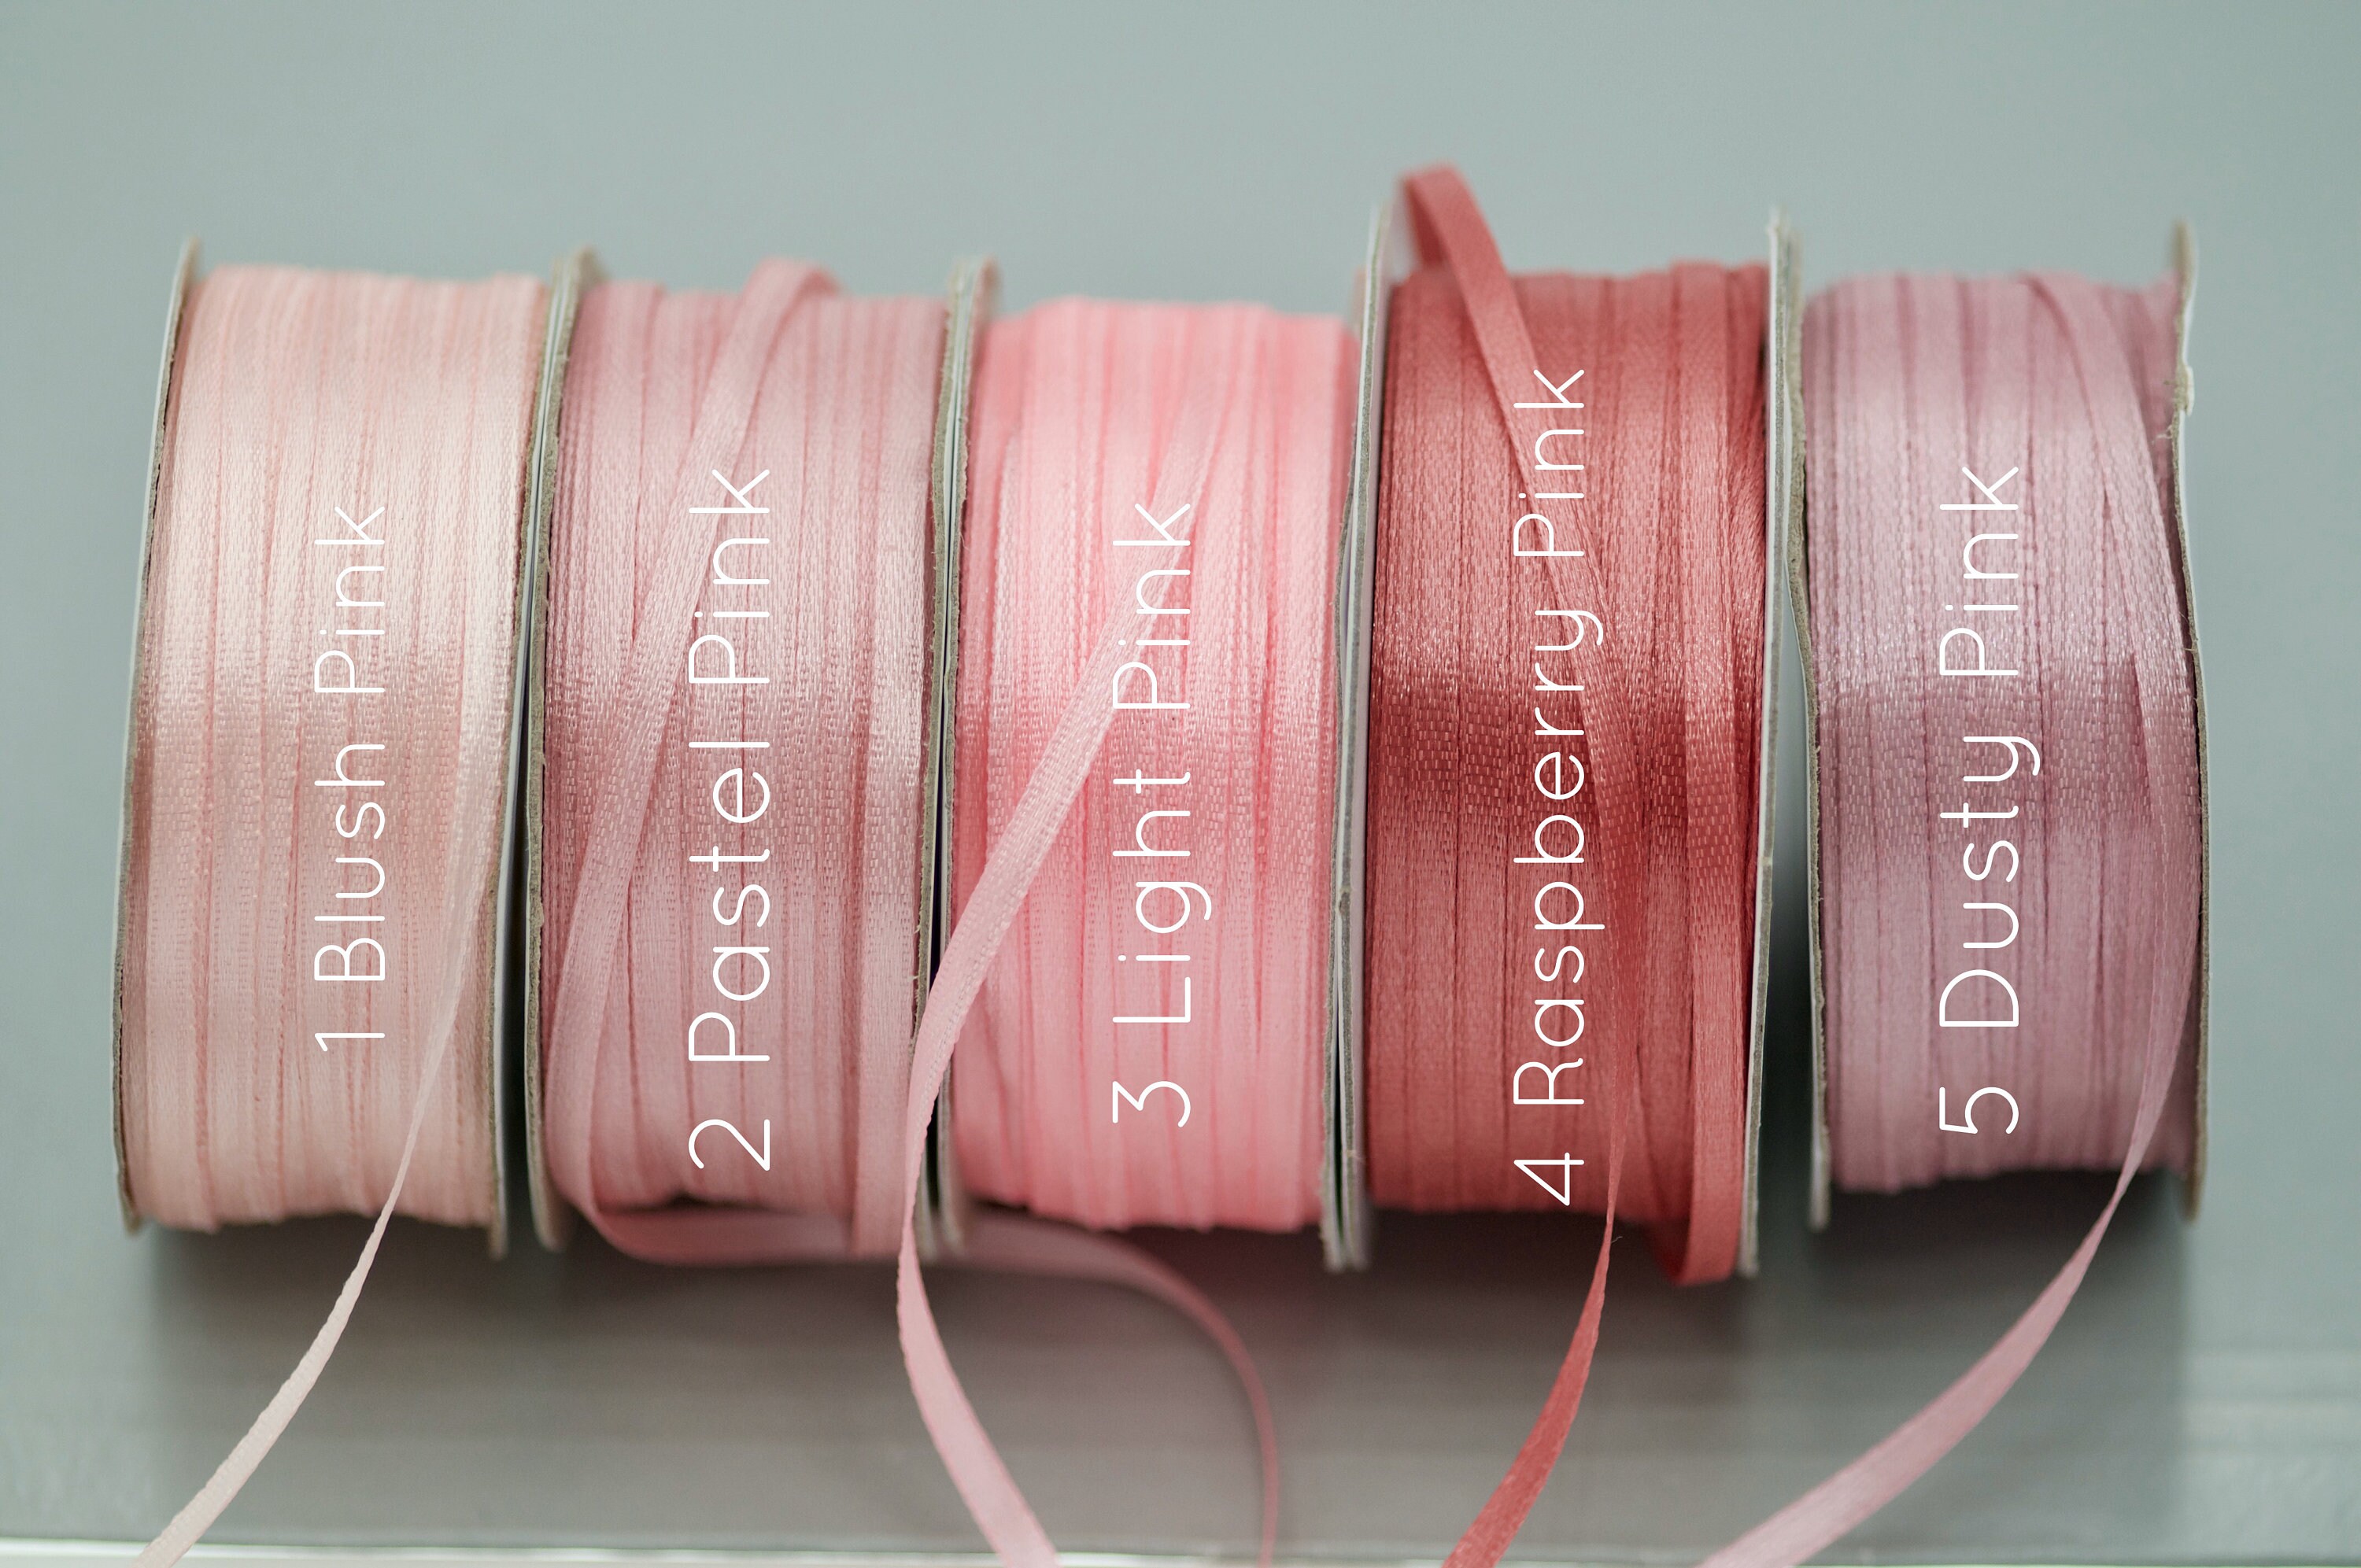 Blush Pink Ribbon 3mm Satin Ribbon 99.5 Yard Pink Skinny 